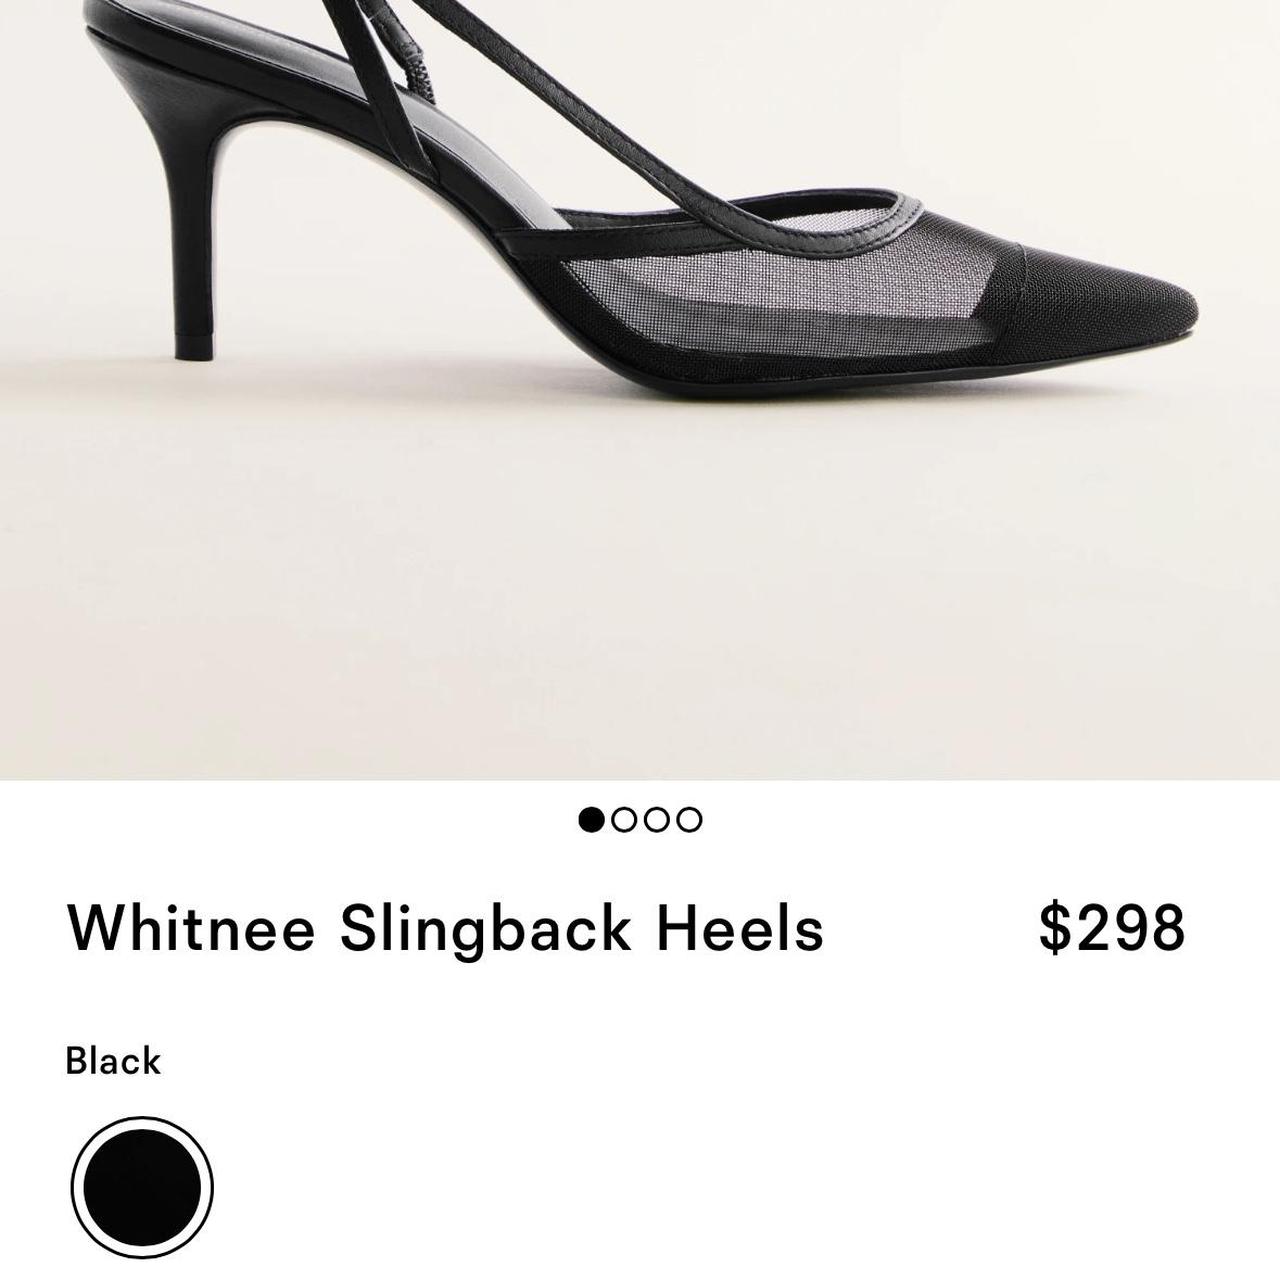 Whitnee Slingback Heels